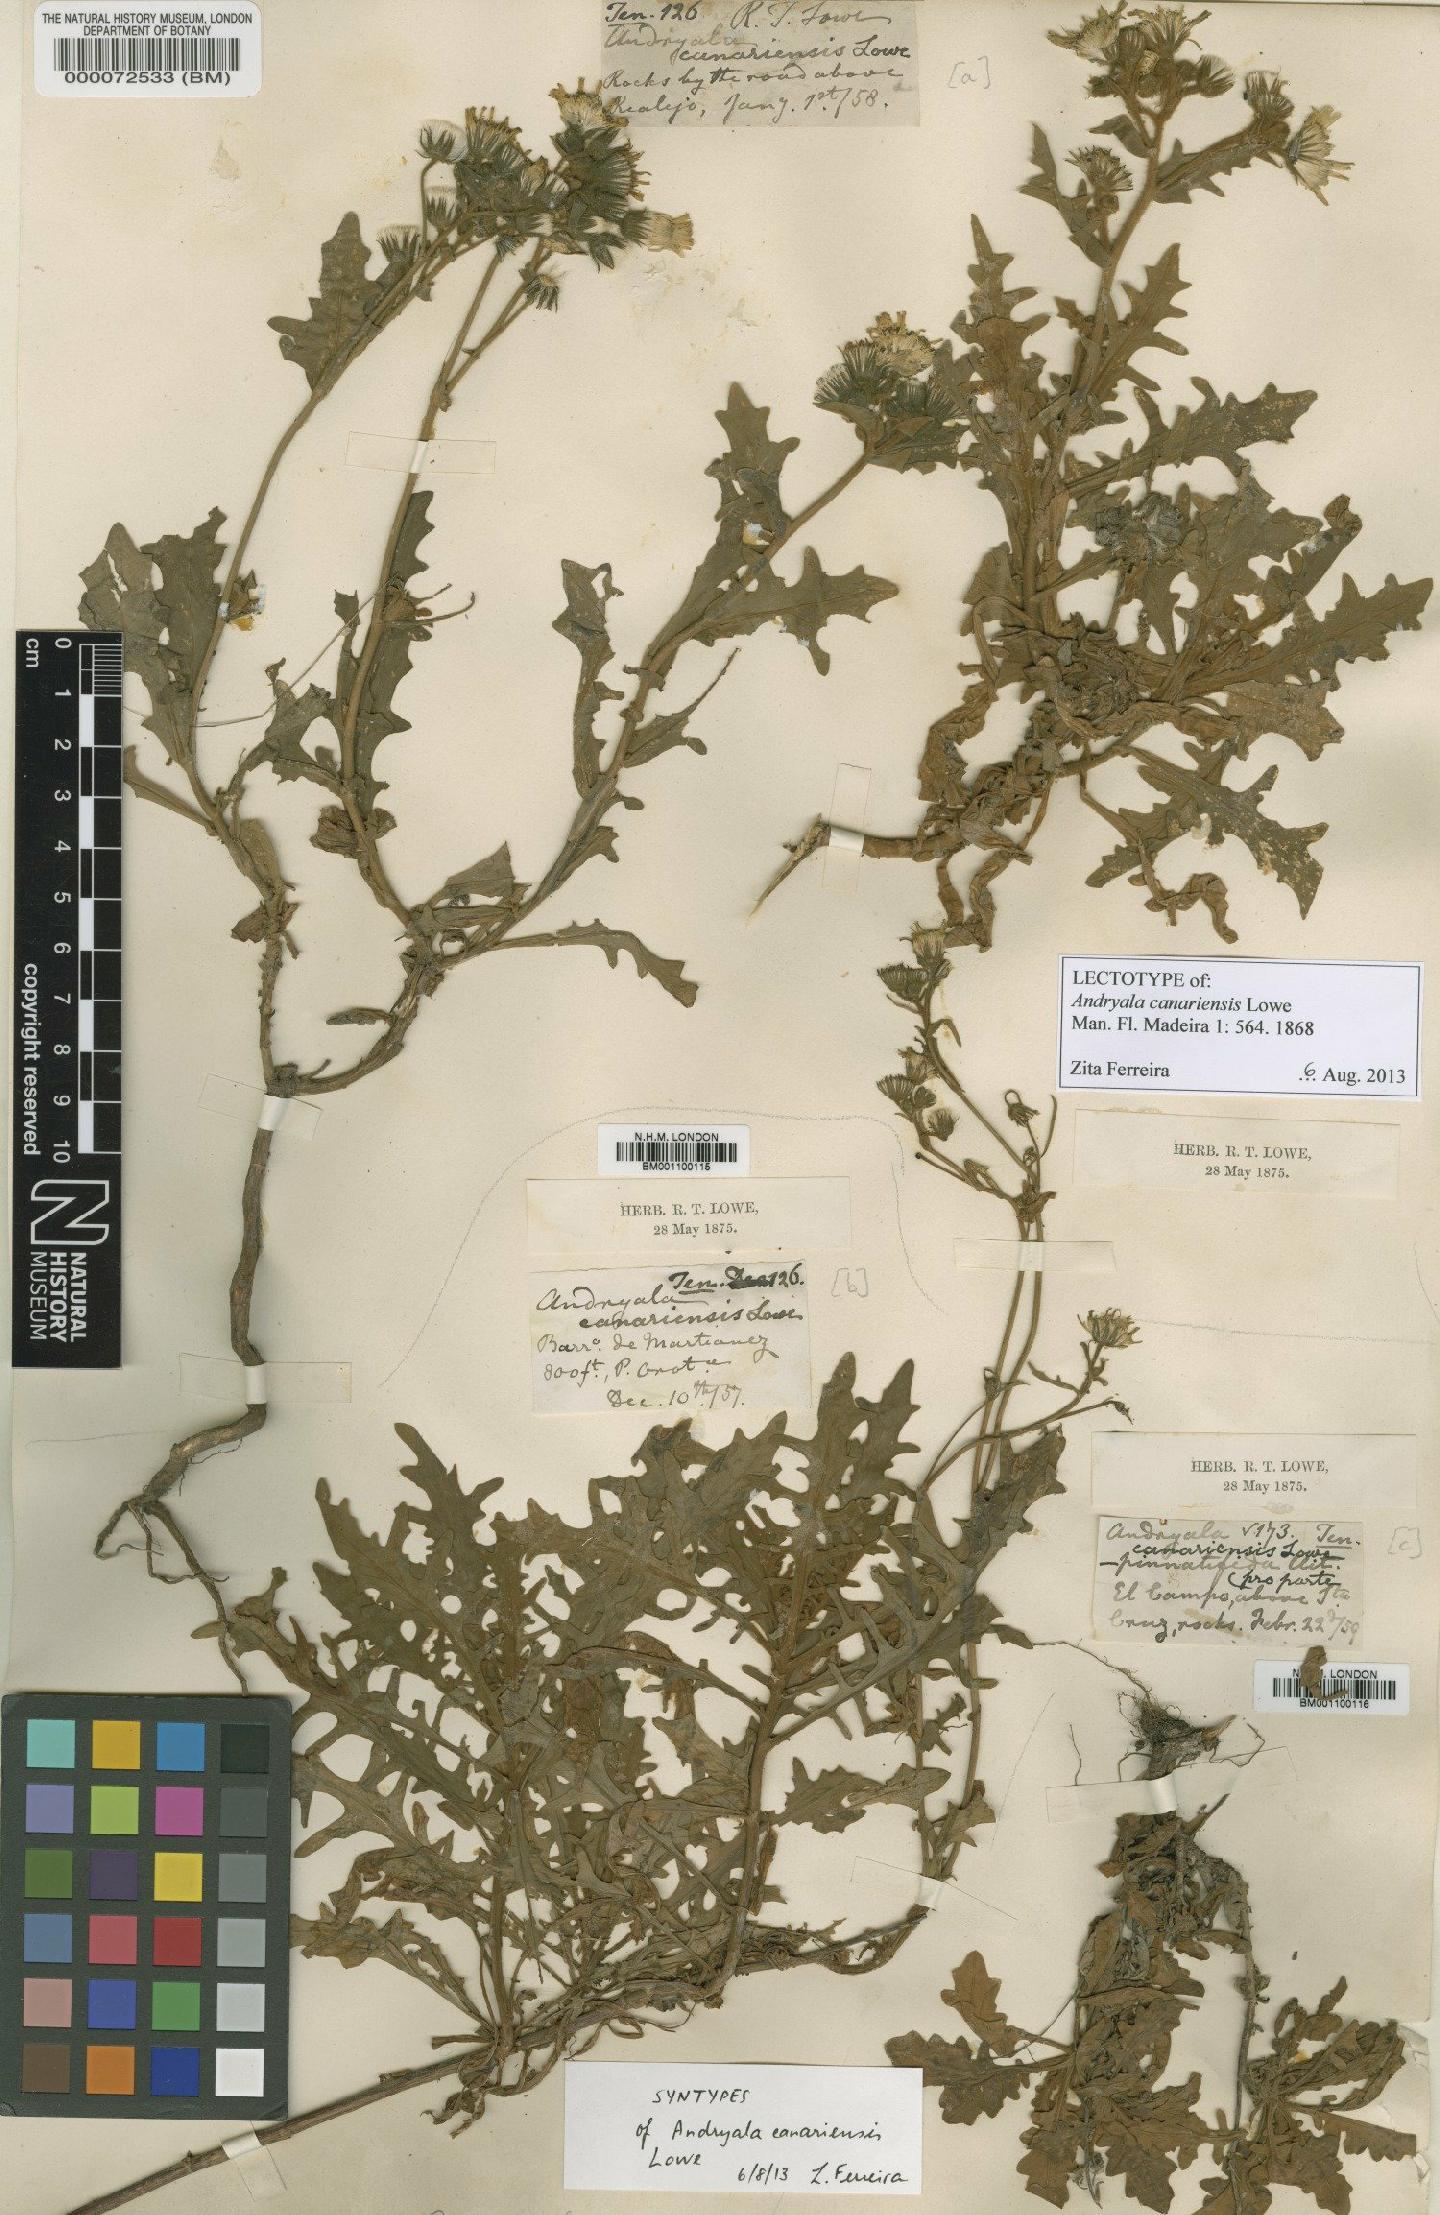 To NHMUK collection (Andryala canariensis Lowe; Syntype; NHMUK:ecatalogue:4592744)